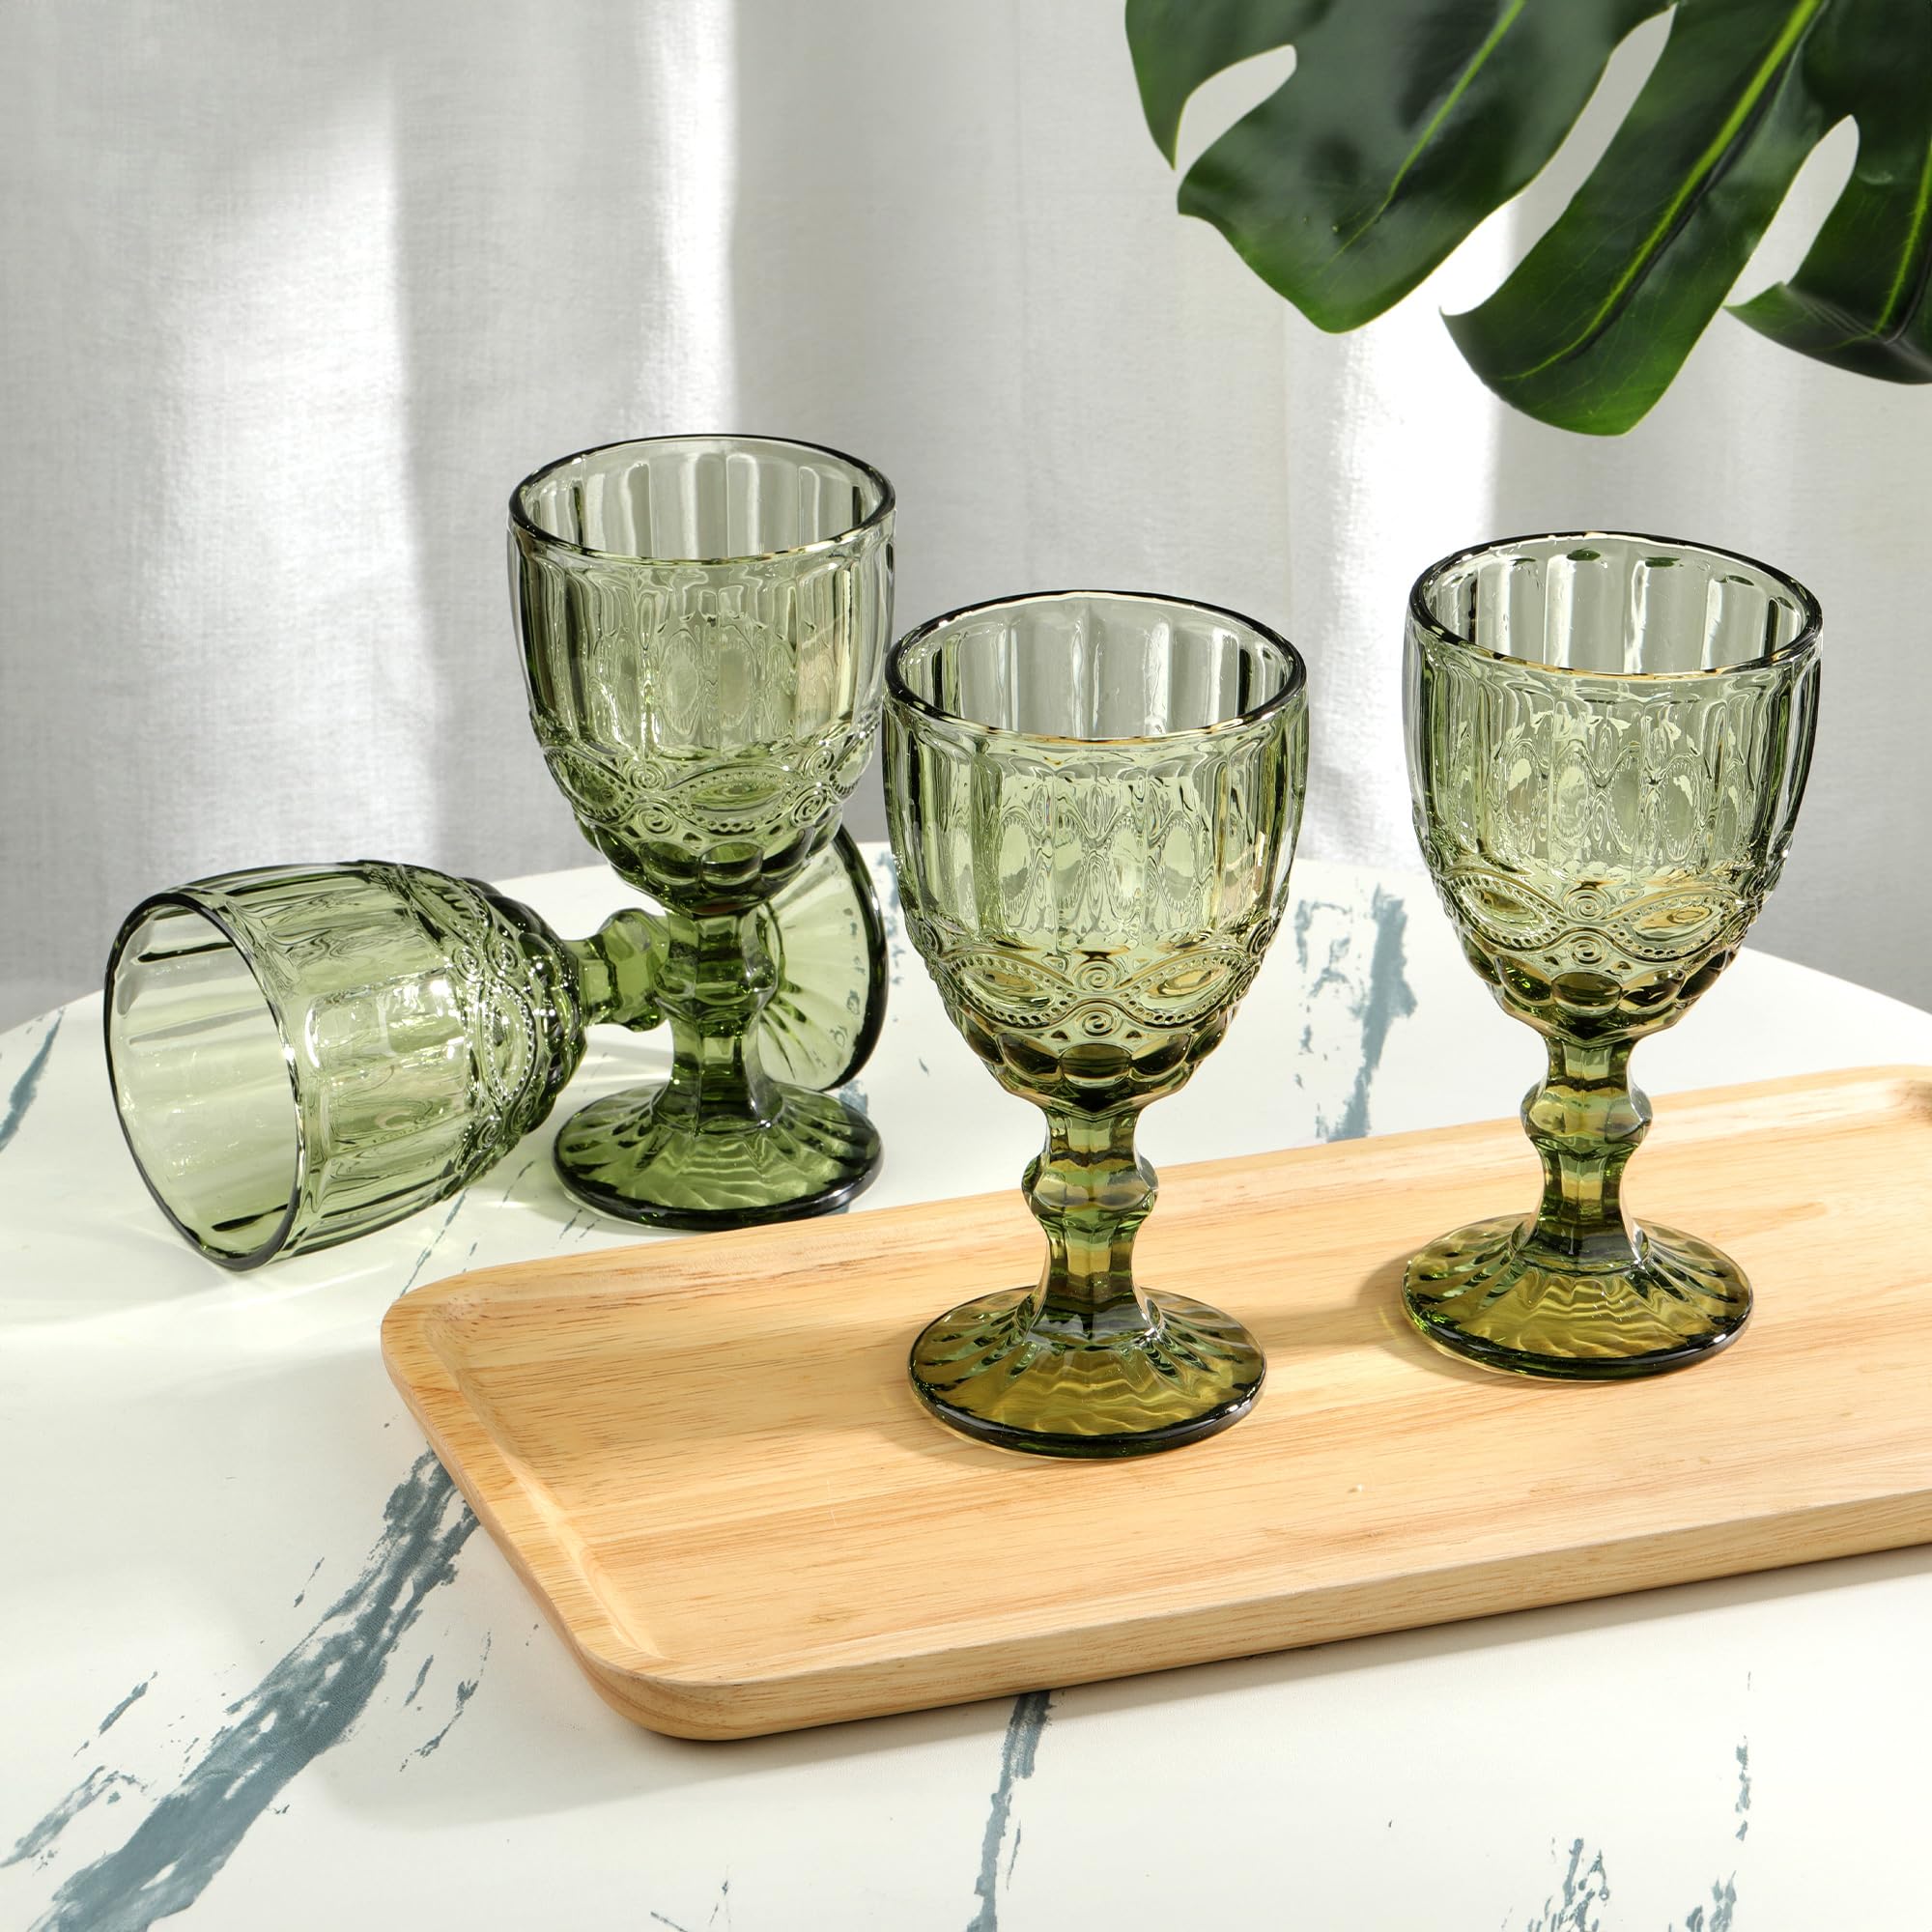 Joeyan Green Vintage Wine Glasses,Clear Water Goblet Glasses with Embossed Serpentine Pattern,Stemmed Colored Glassware Set for Wedding Party Banquet Feast,10 oz,Set of 4,Dishwasher Safe